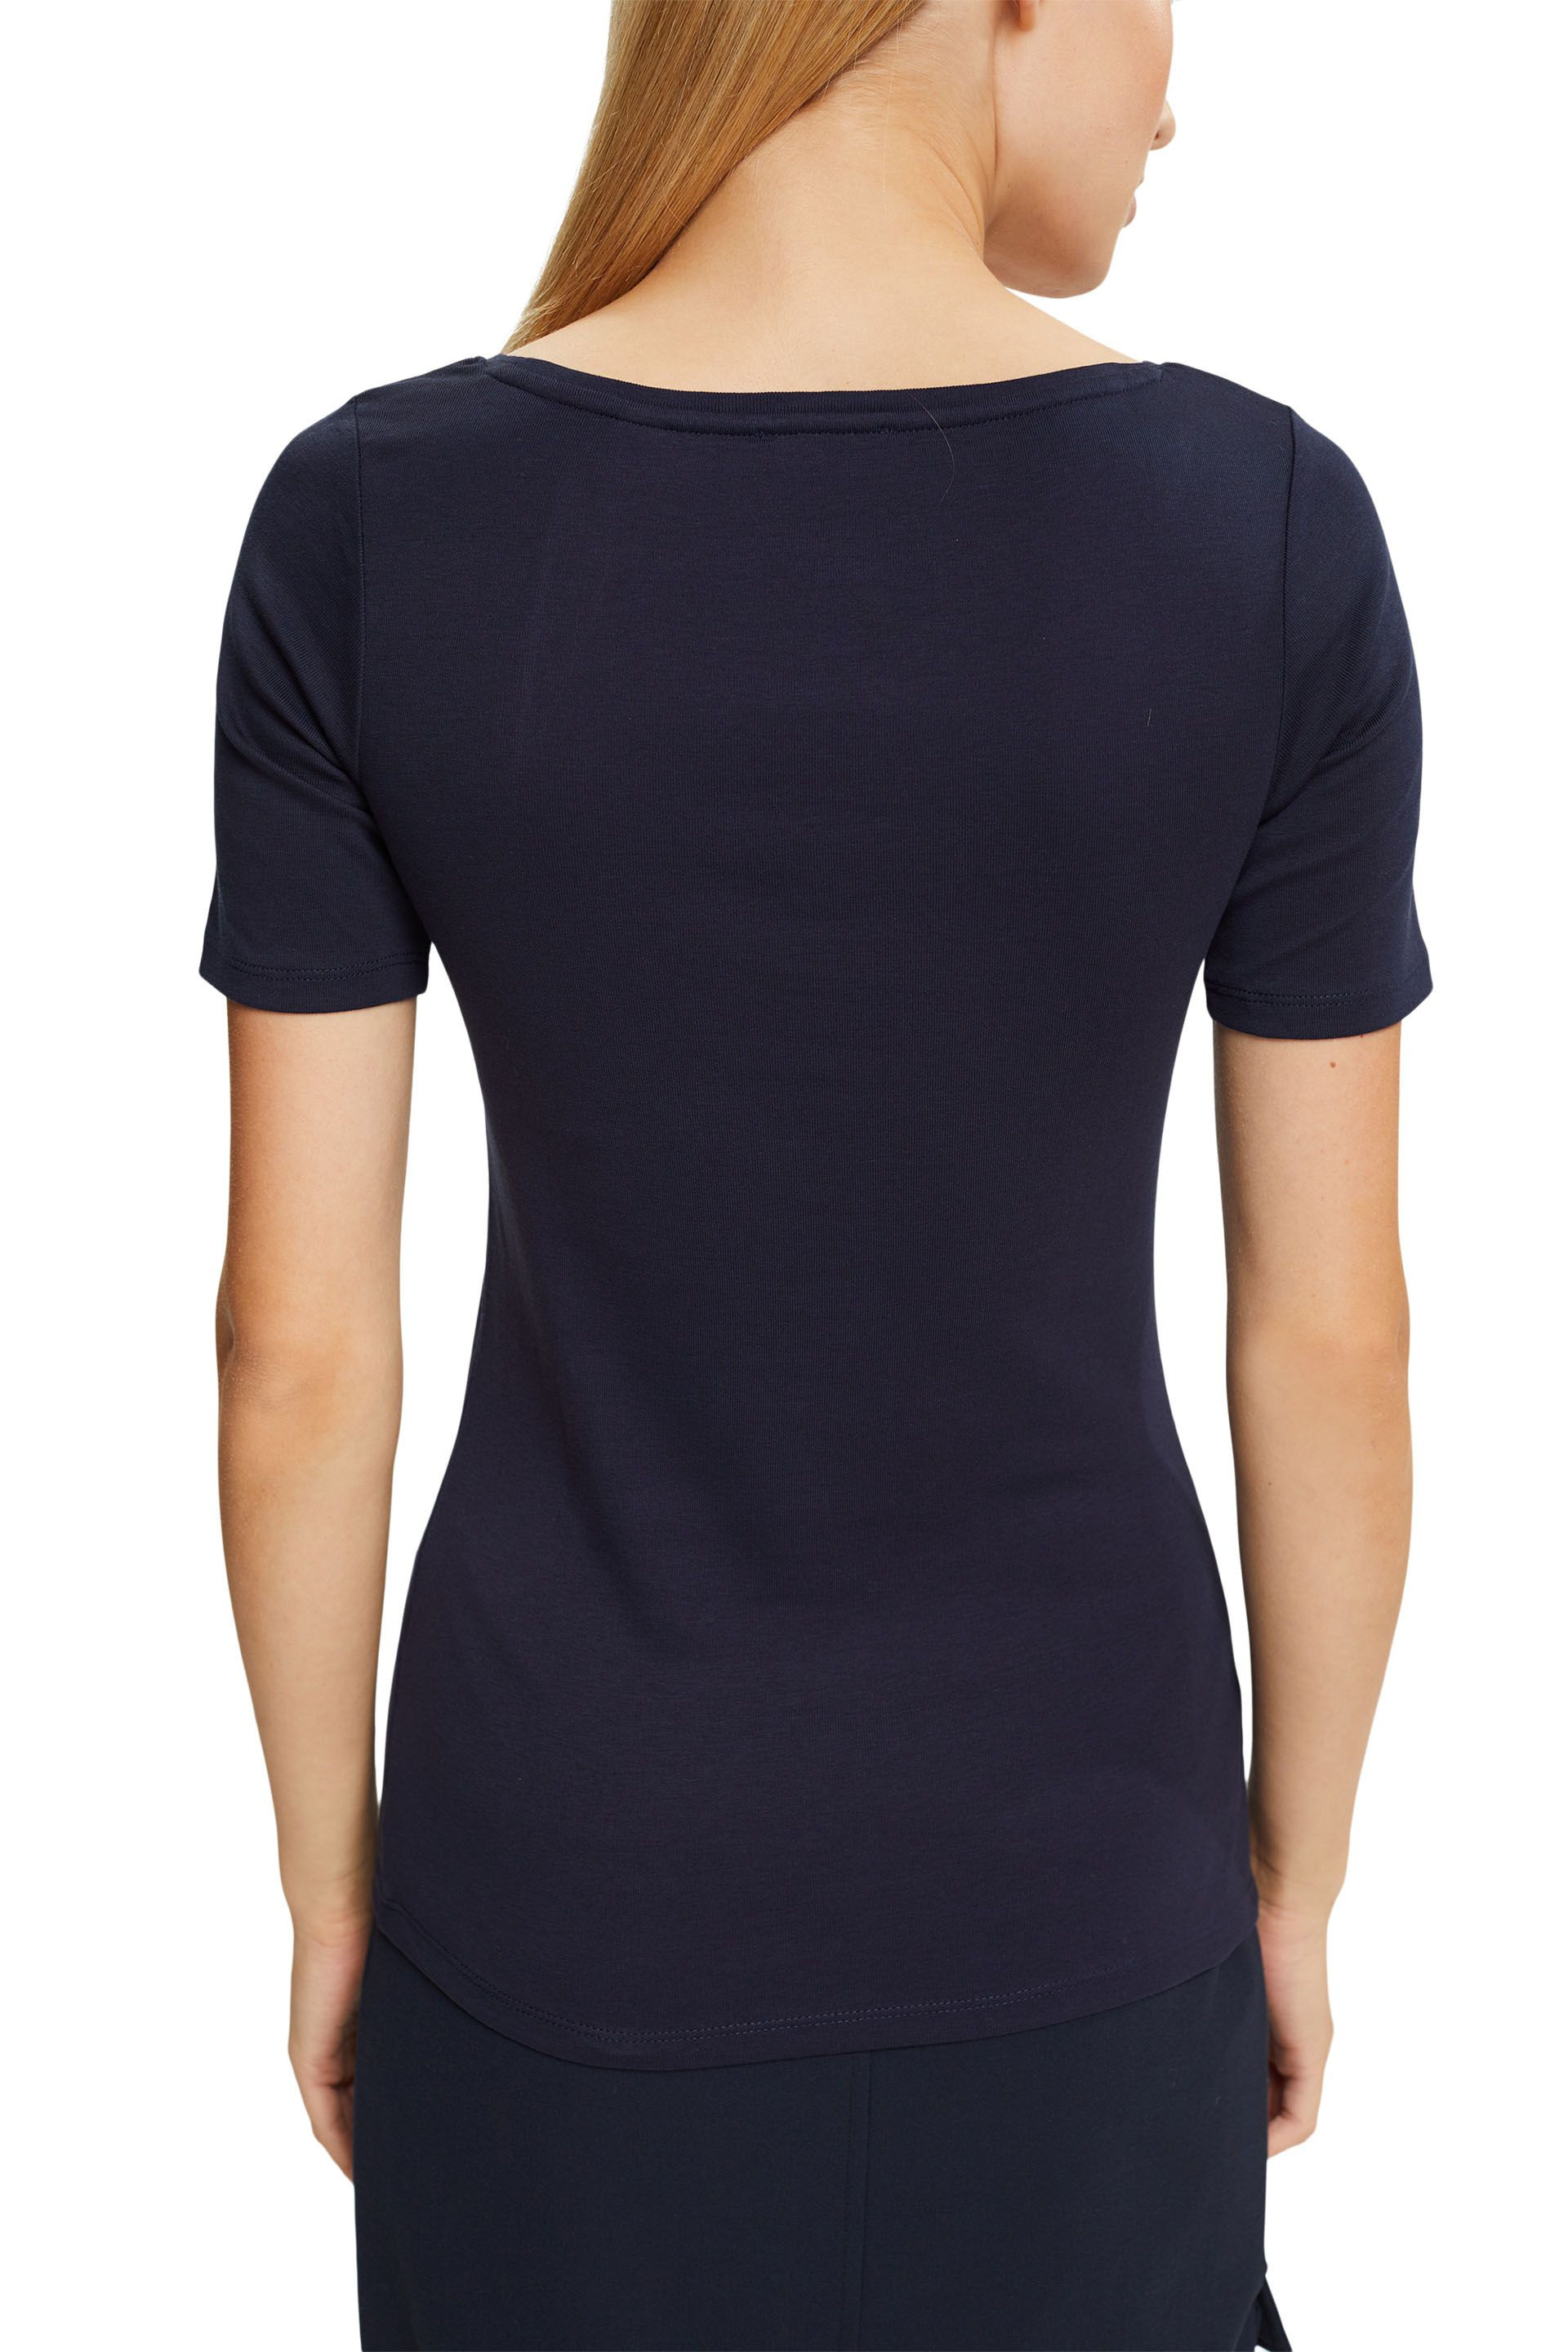 Esprit - Cotton logo T-shirt, Dark Blue, large image number 2